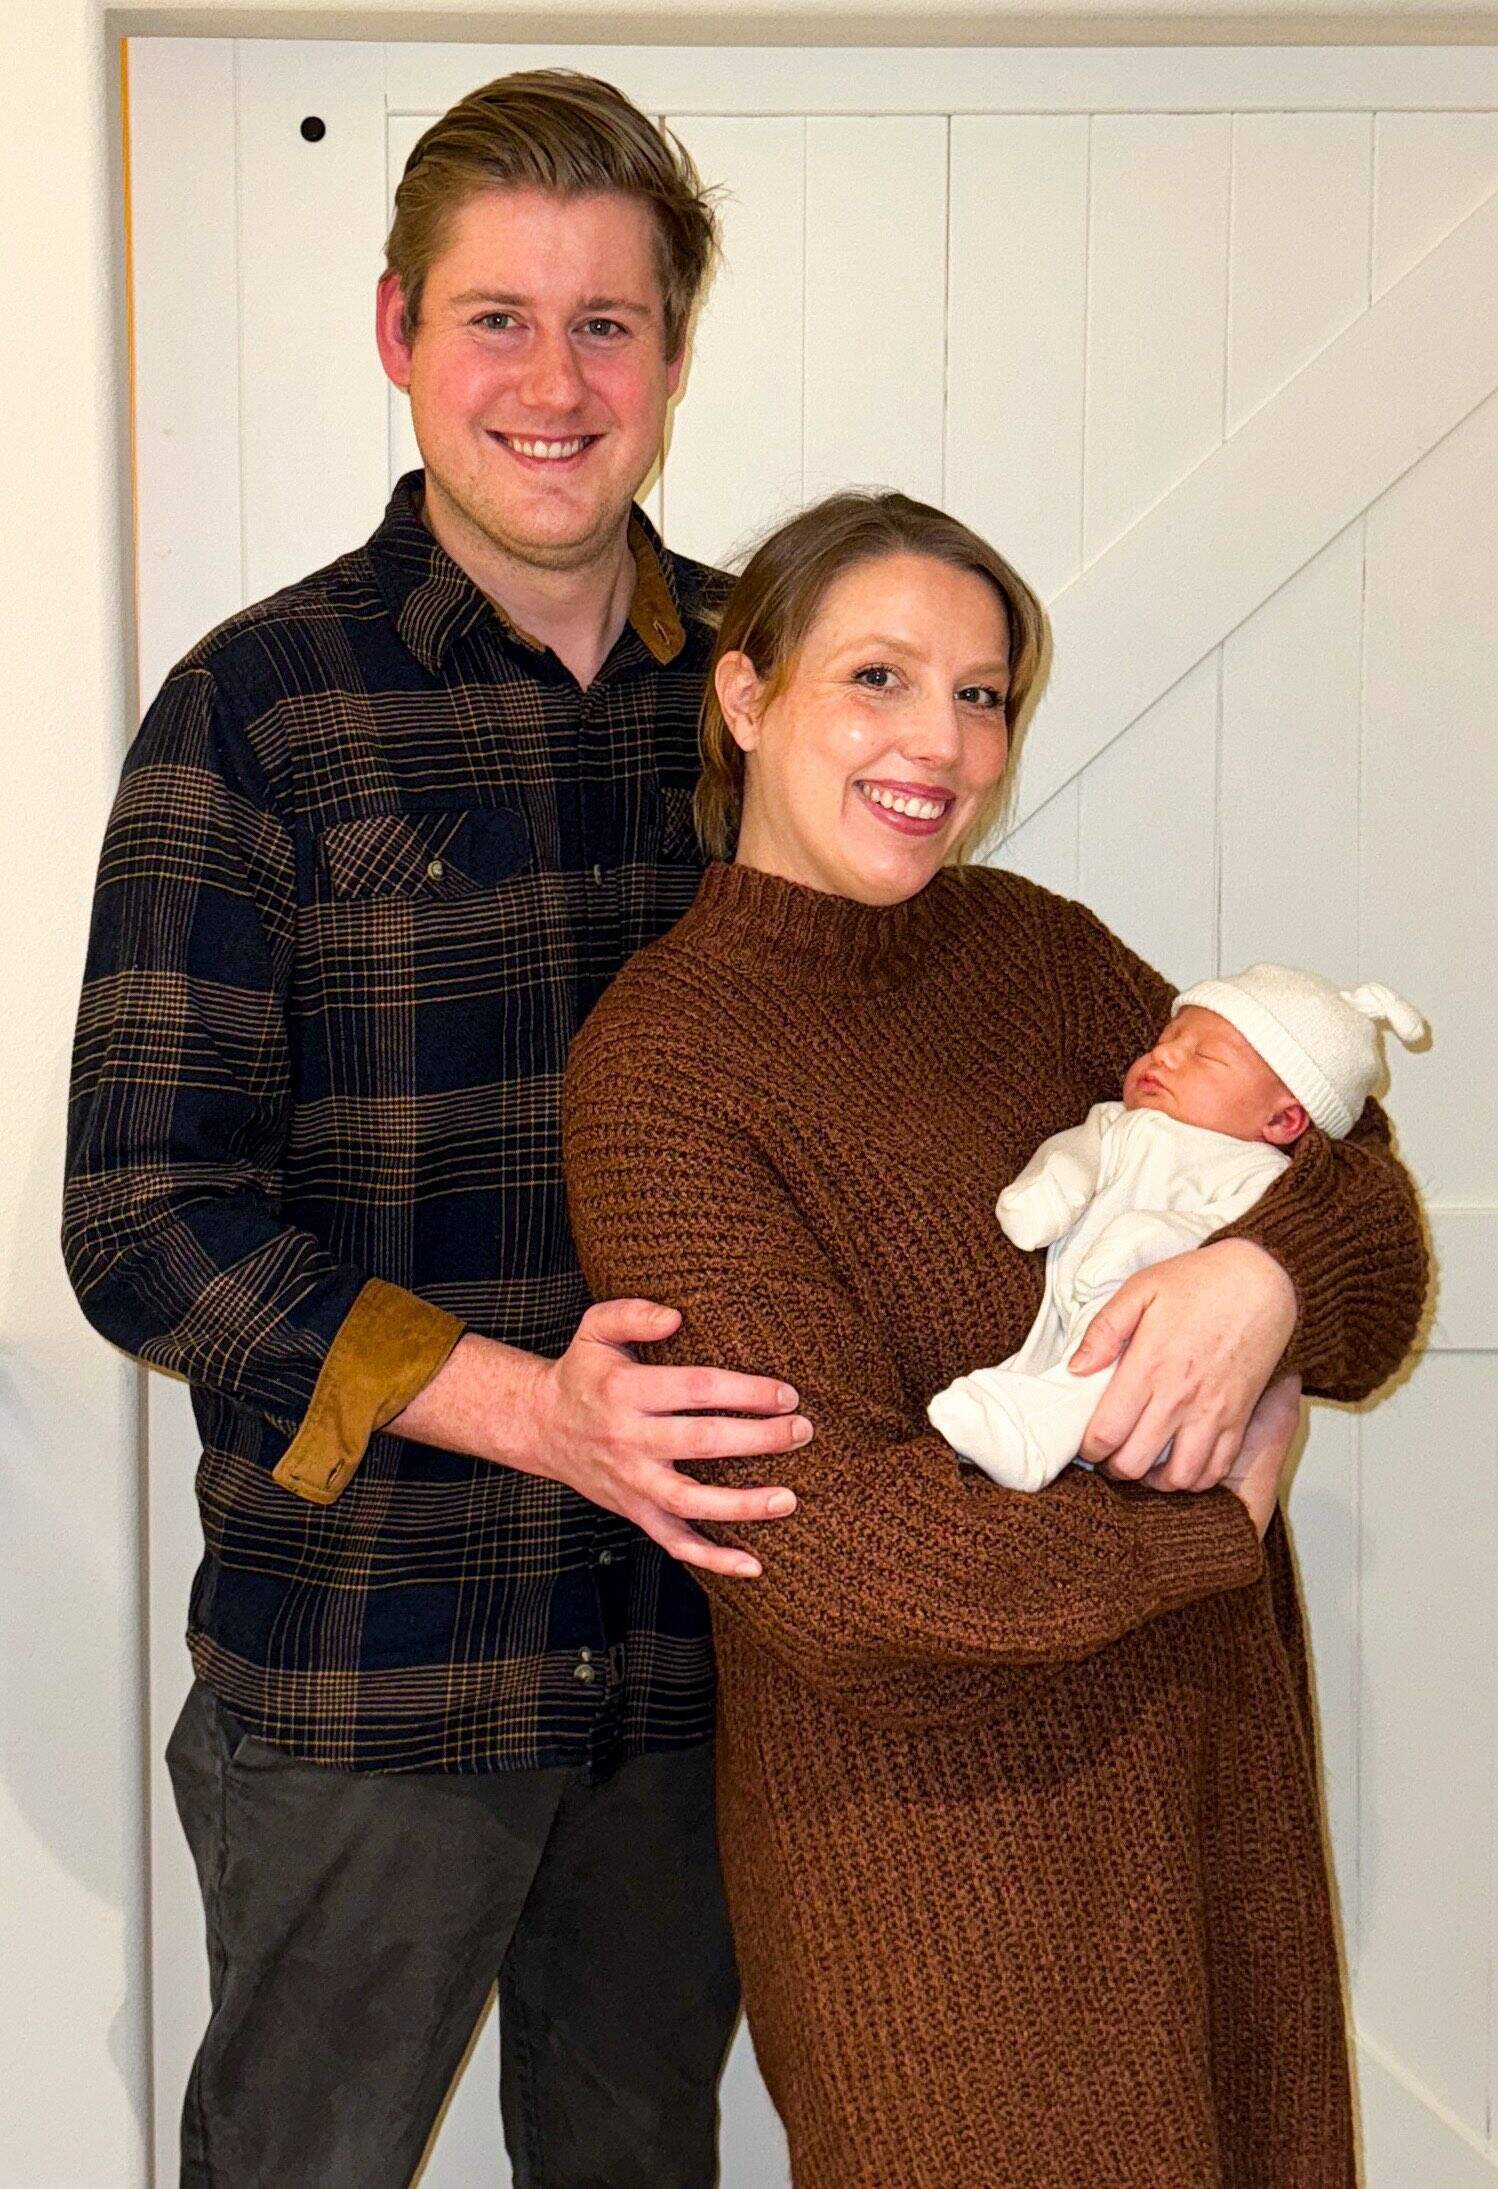 Jeremy and Elizabeth Jost welcomed baby girl Julia on Jan. 3. (Photo provided)